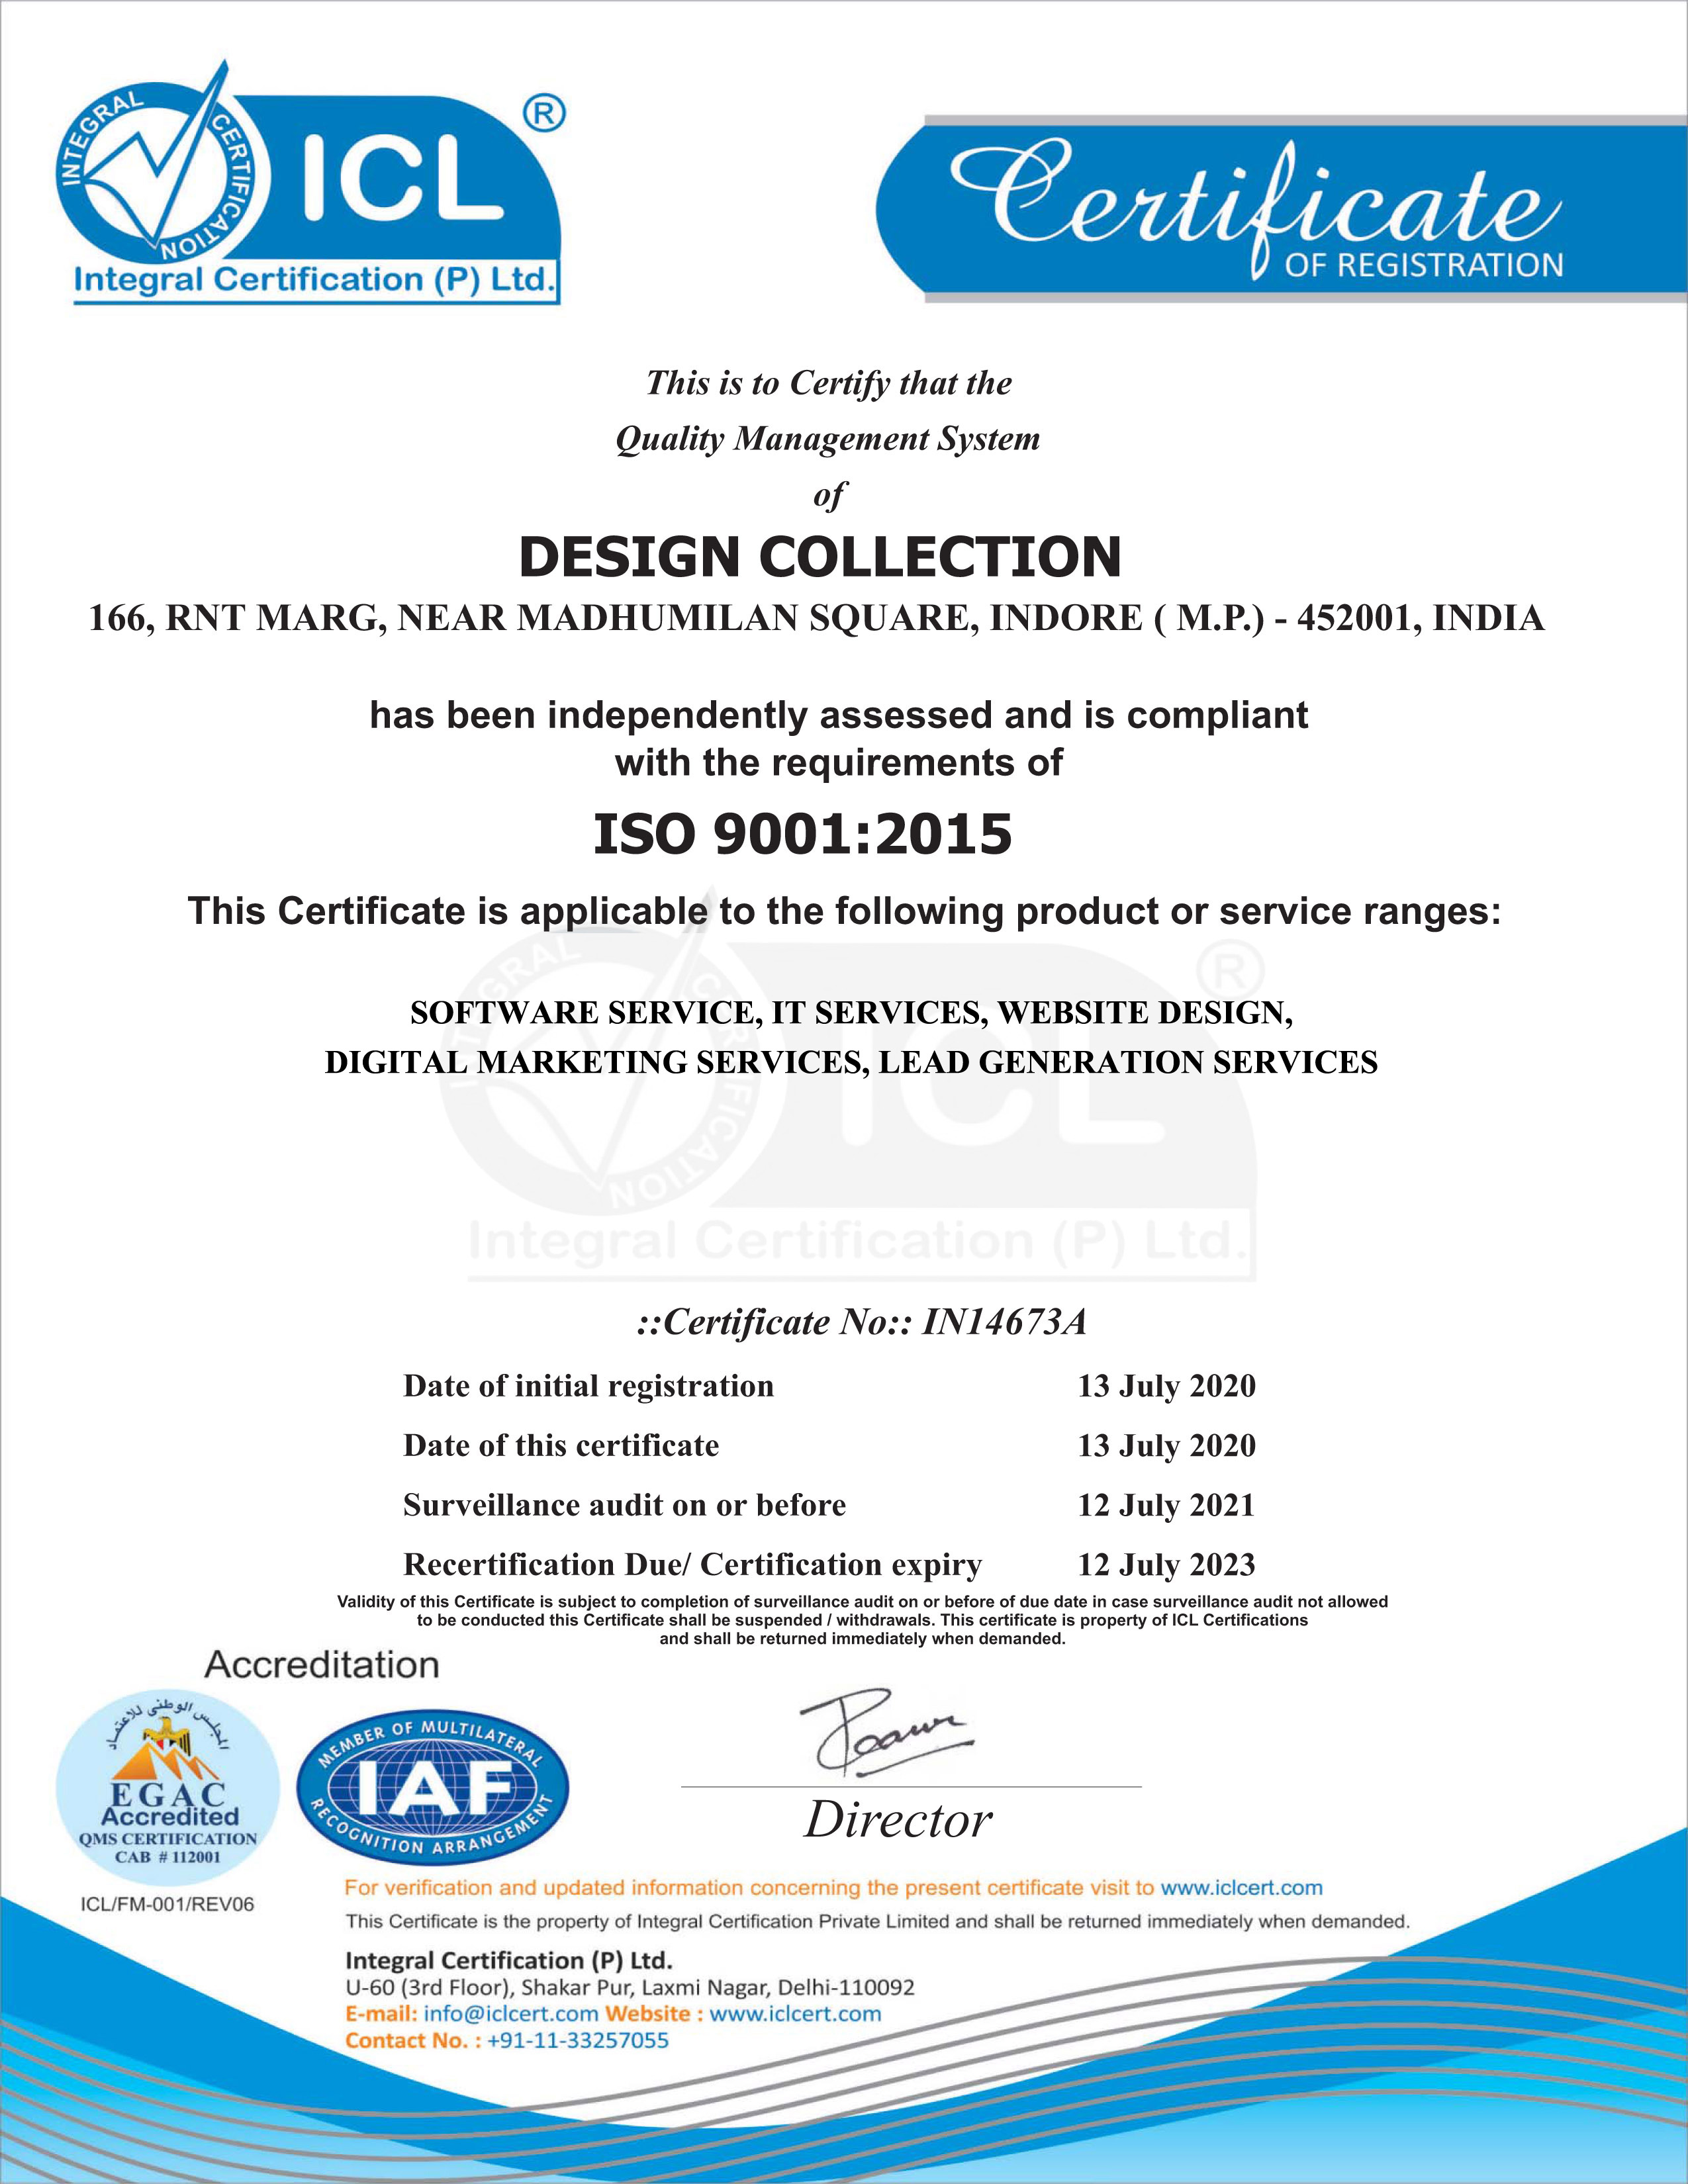 ISO 9001:2015 Certification of Registration)